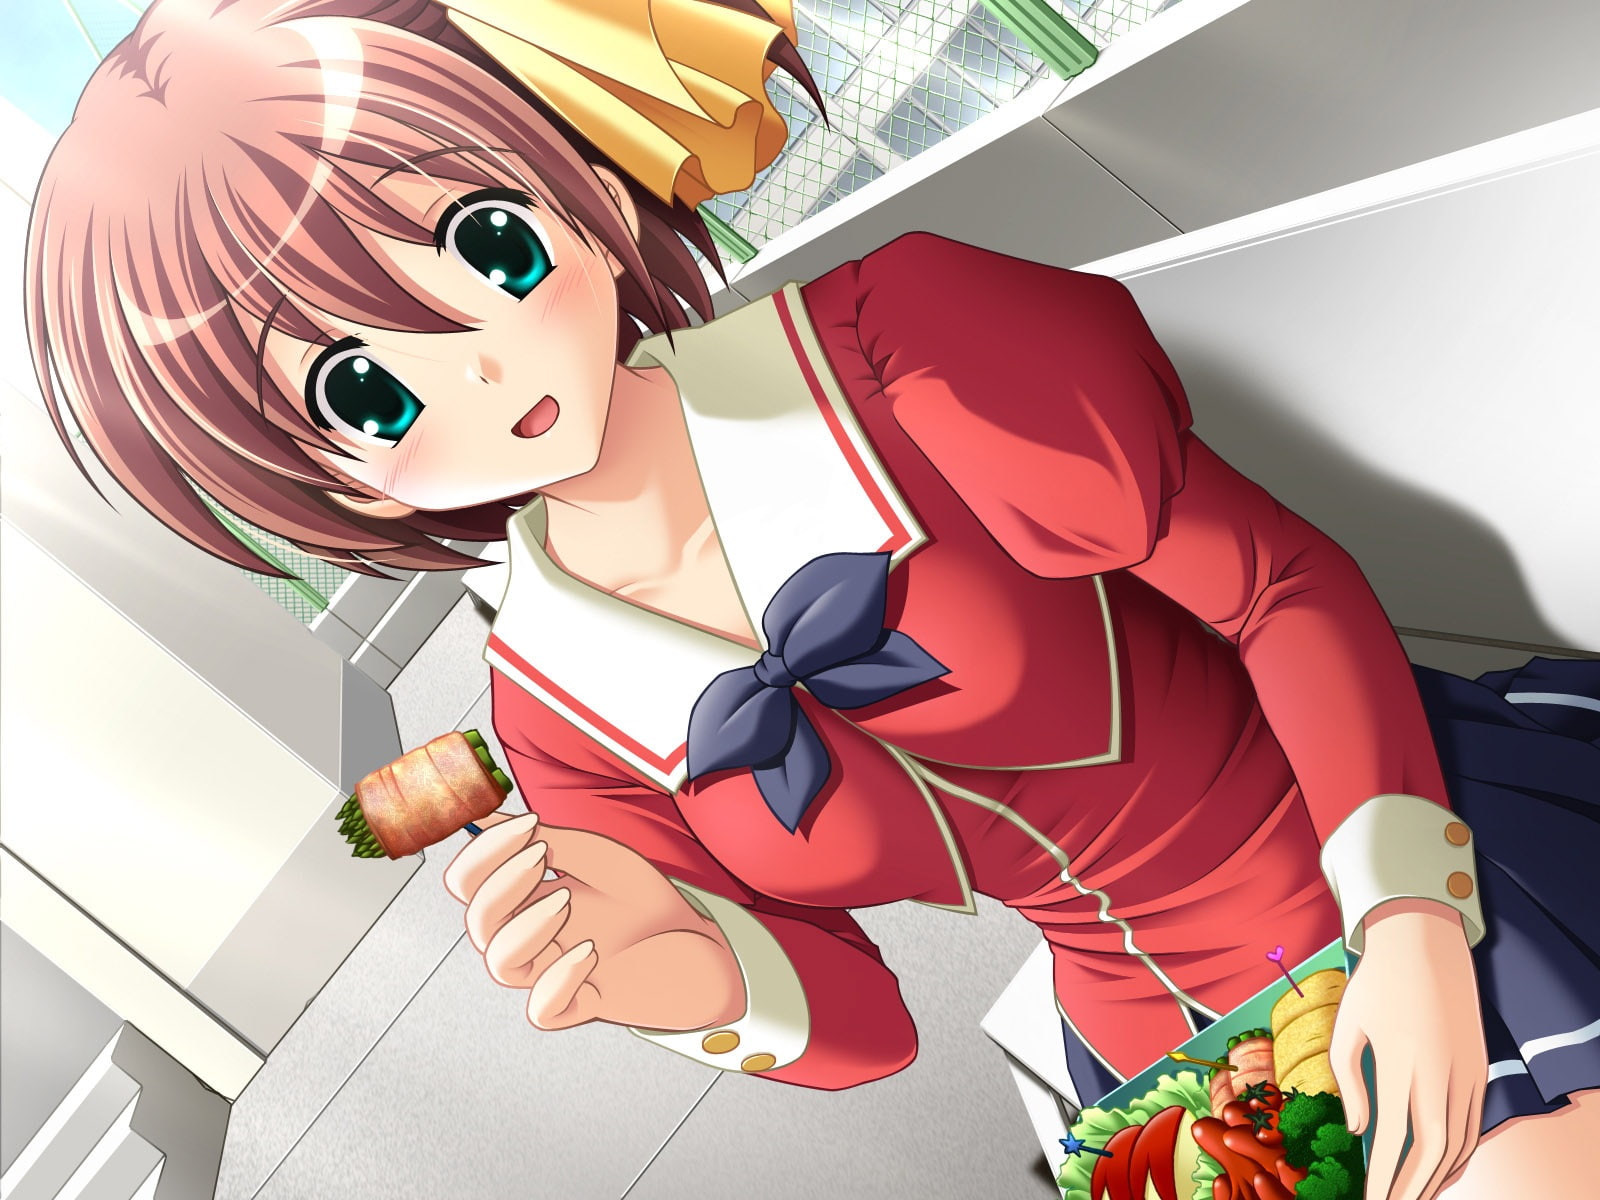 Anime girl in the eating